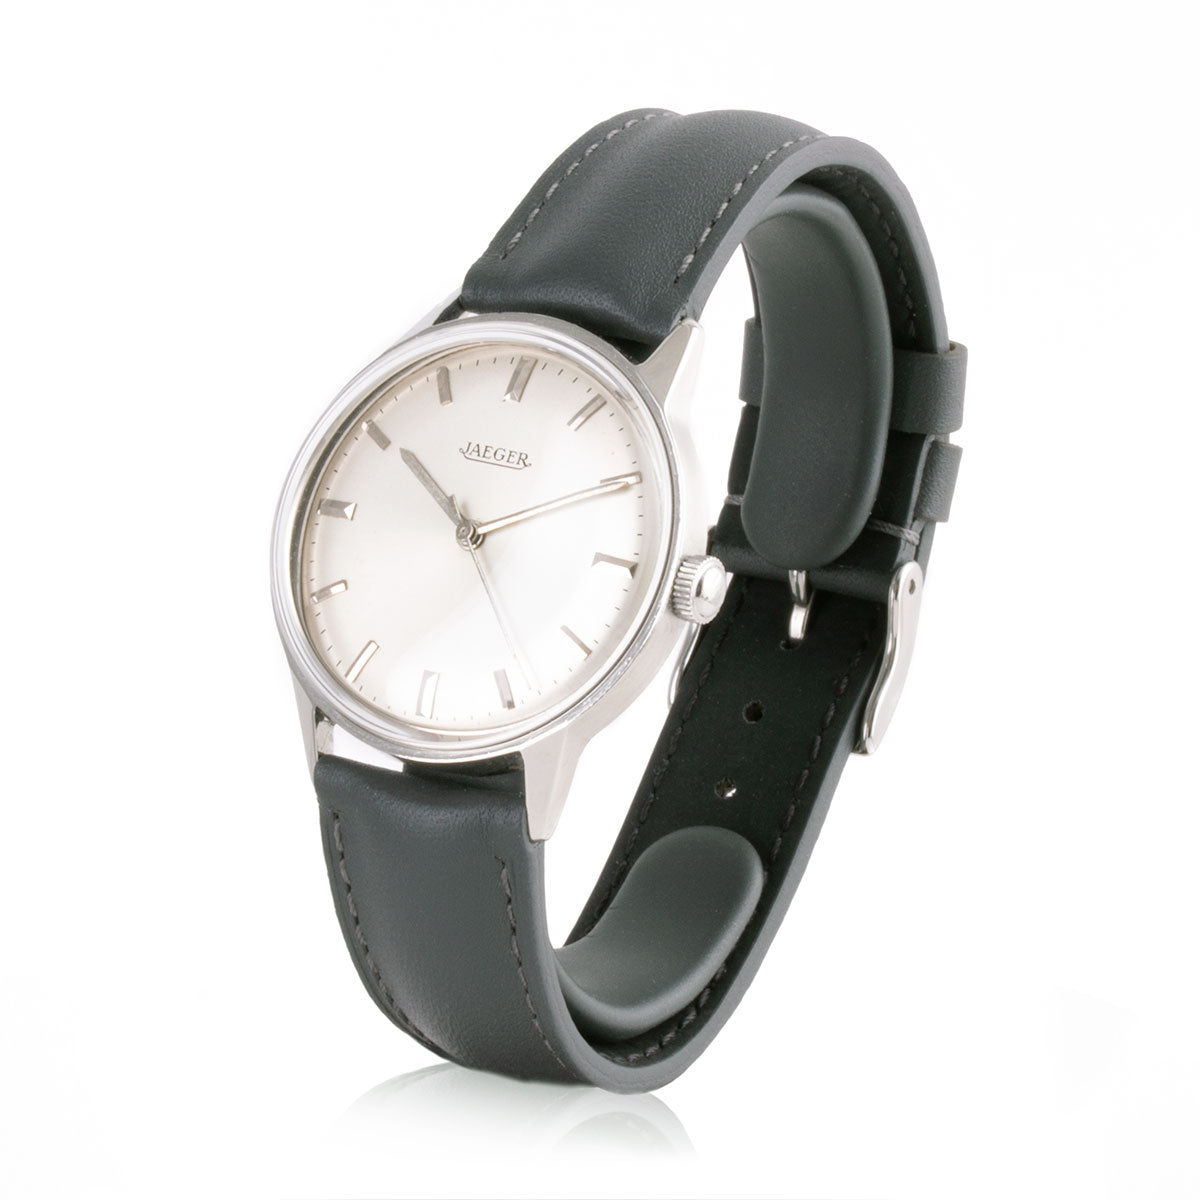 ​Second-hand watch - Jaeger - 2100€